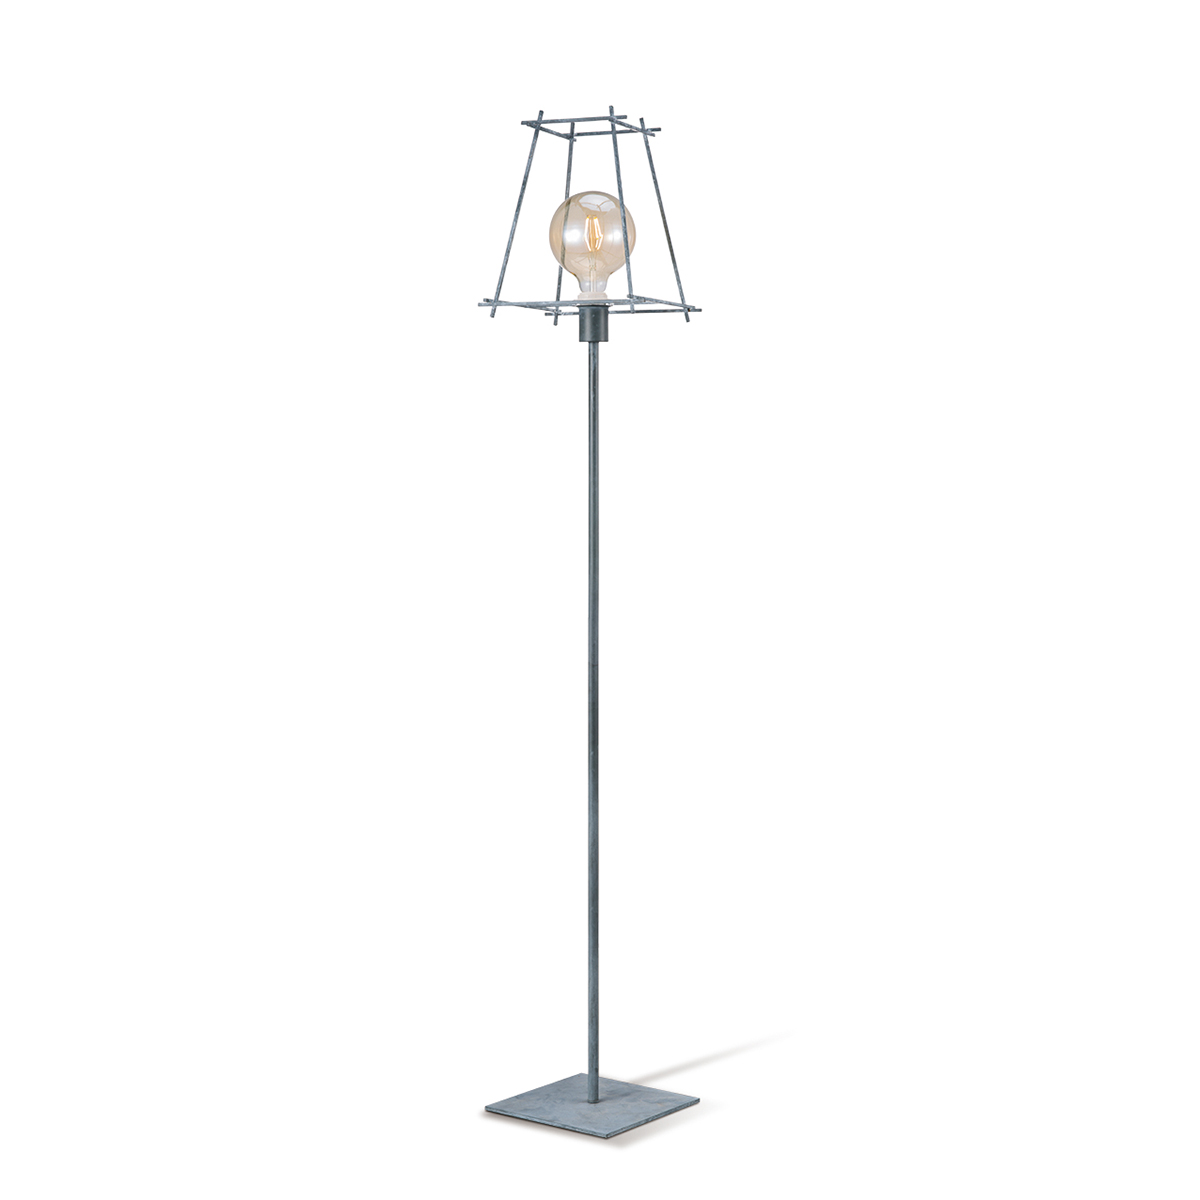 Tangla lighting - TLF2022-01GY - LED floor lamp 1 Light - metal in concrete grey - medium - E27